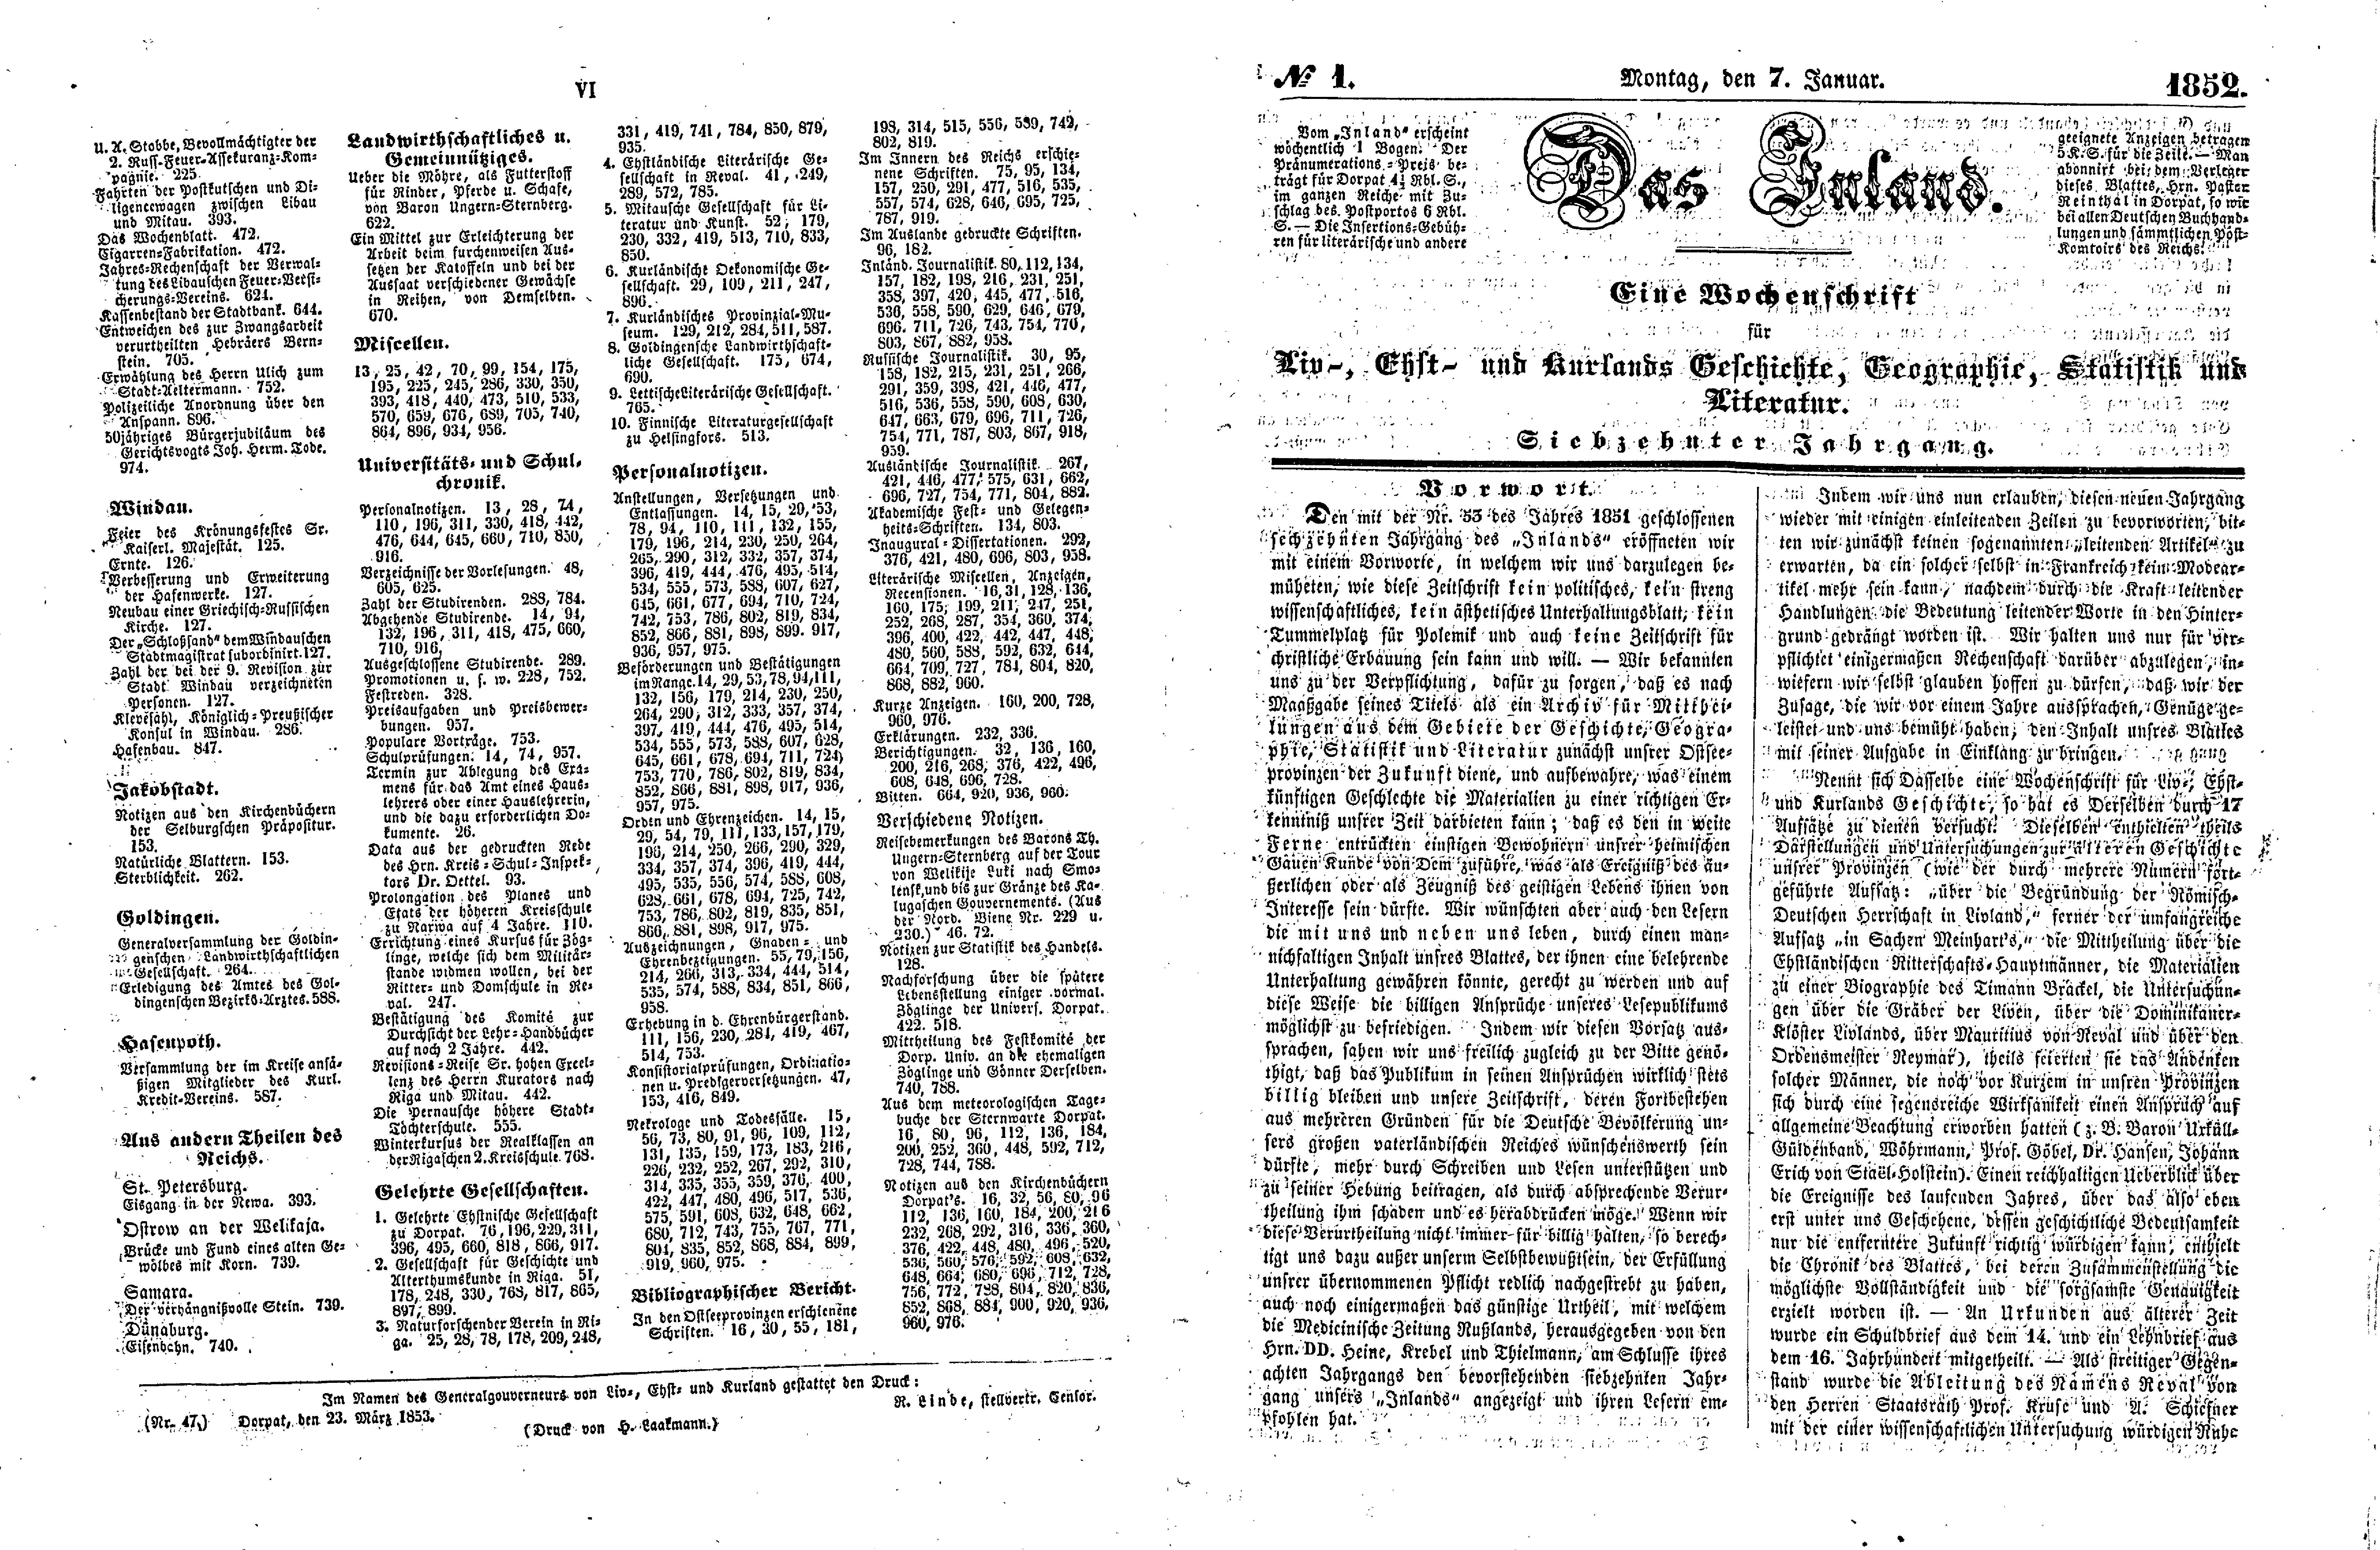 Das Inland [17] (1852) | 4. (VI-2) Index, Main body of text